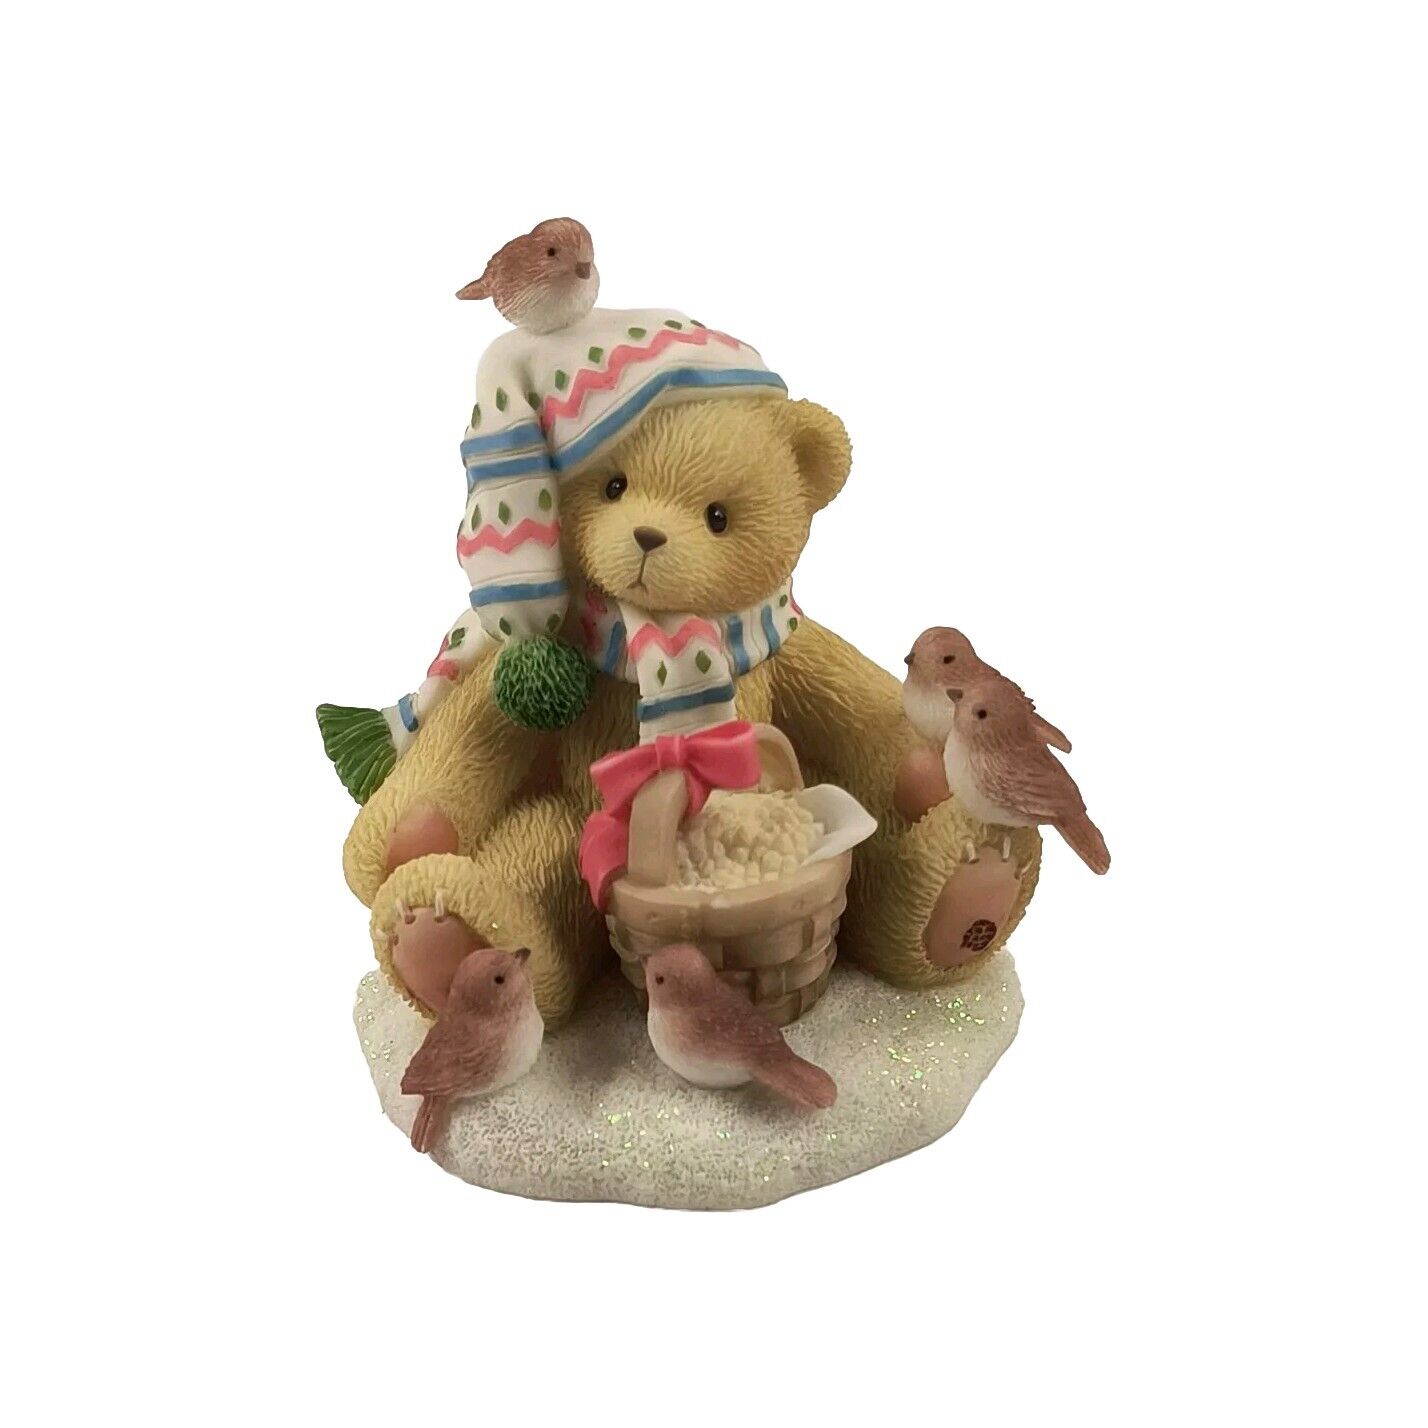 Vtg 1998 Enesco Cherished Teddies Bear Figurine Paul Christmas Limited Edition 